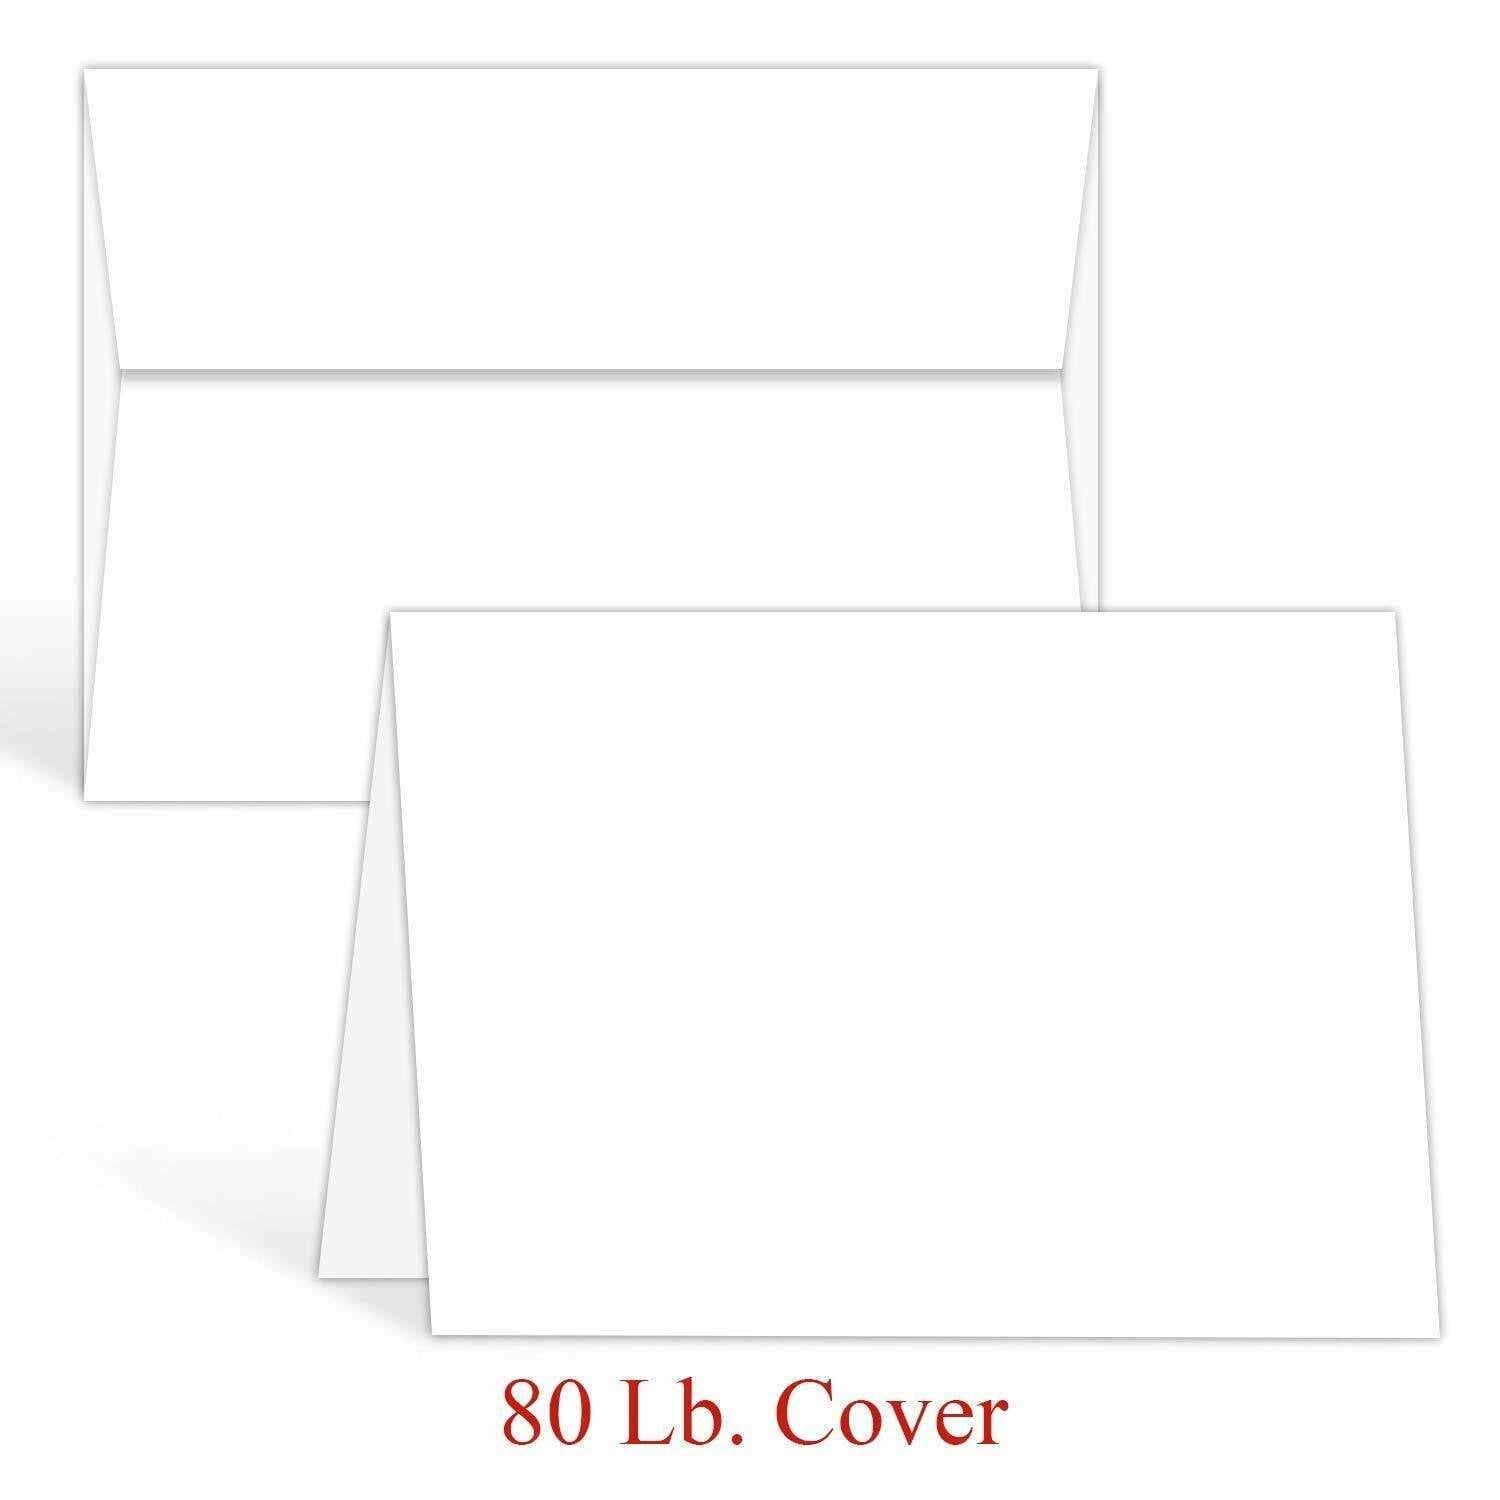 Blank Card Set - 20 Cards and Envelopes Size A2 – Hand Lettered Design